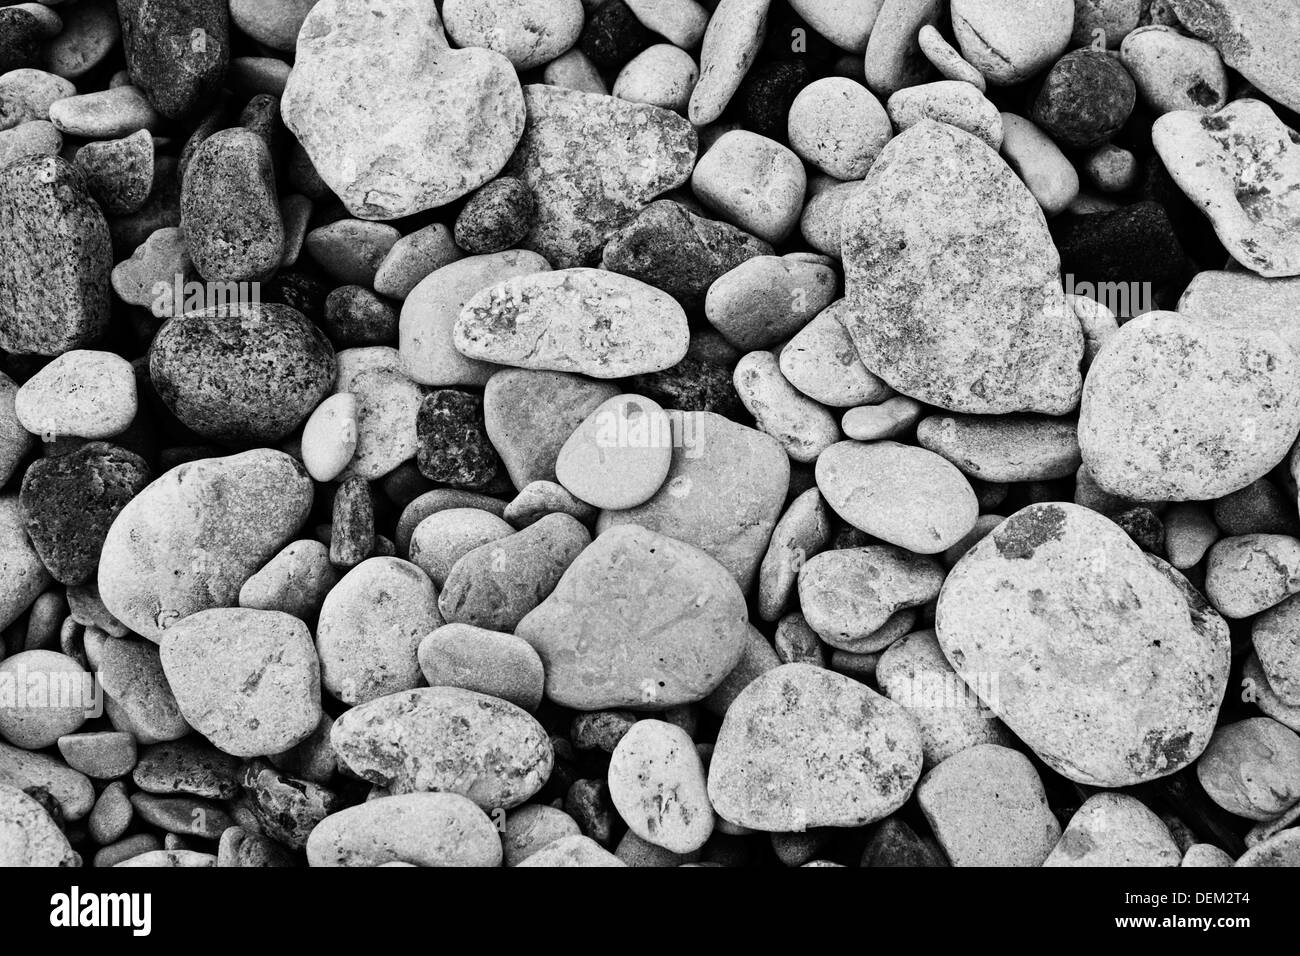 Assortment of Small Beach Rocks Stock Photo